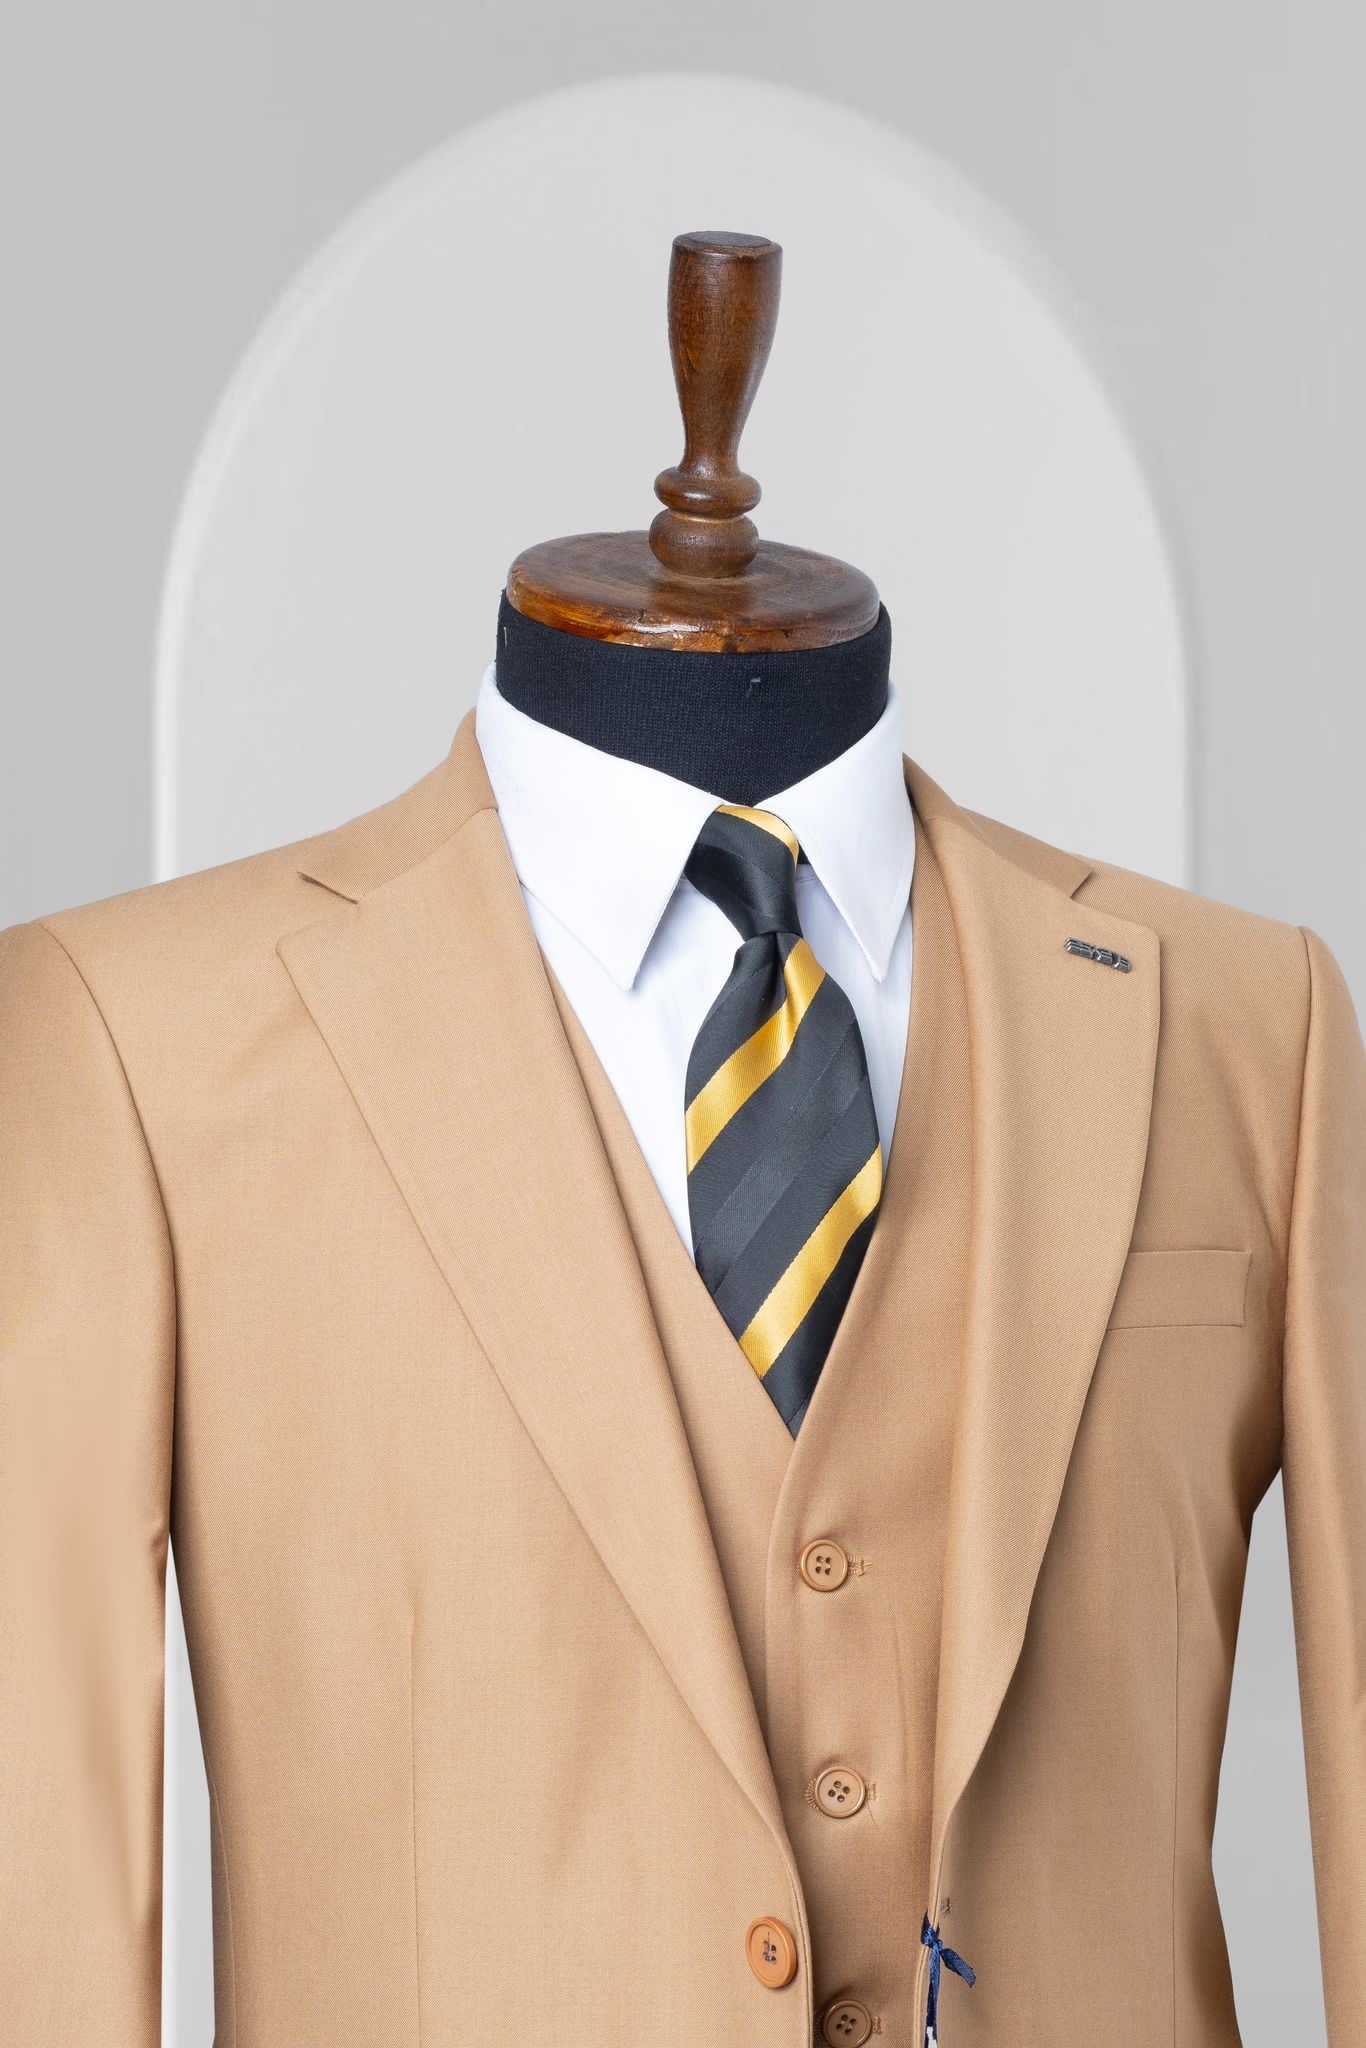 Turkish 3-Piece Suit Wholesale: Authentic 3-Piece Elegance for Discerning Retailers - 6 Suit Pack (Model: AA_Tur_4_329)